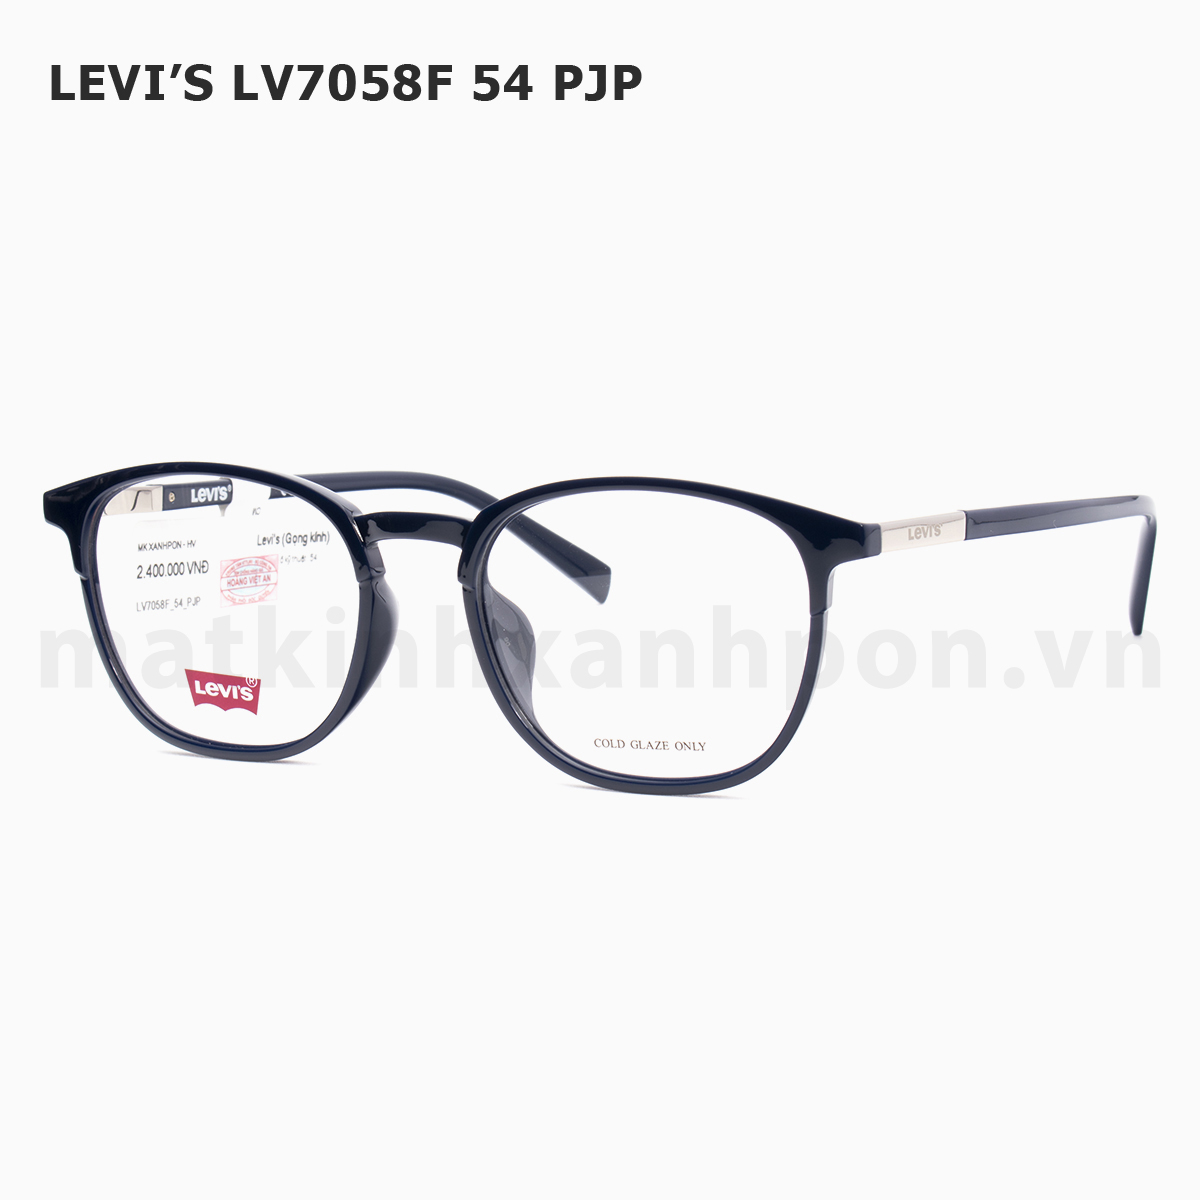 Levi’s LV7058F 54 PJP